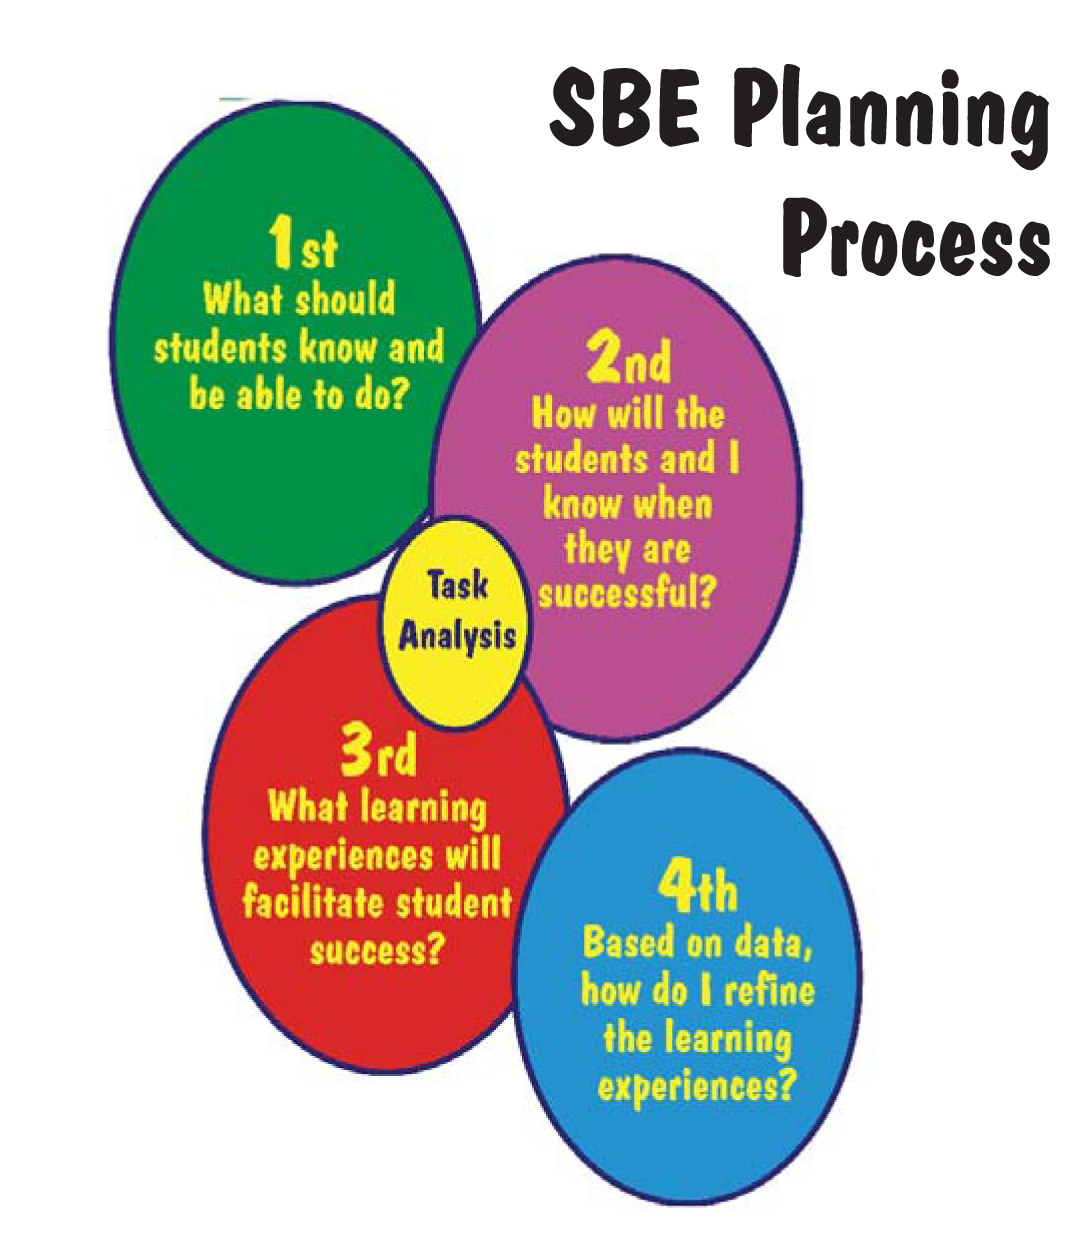 SBE Planning Process